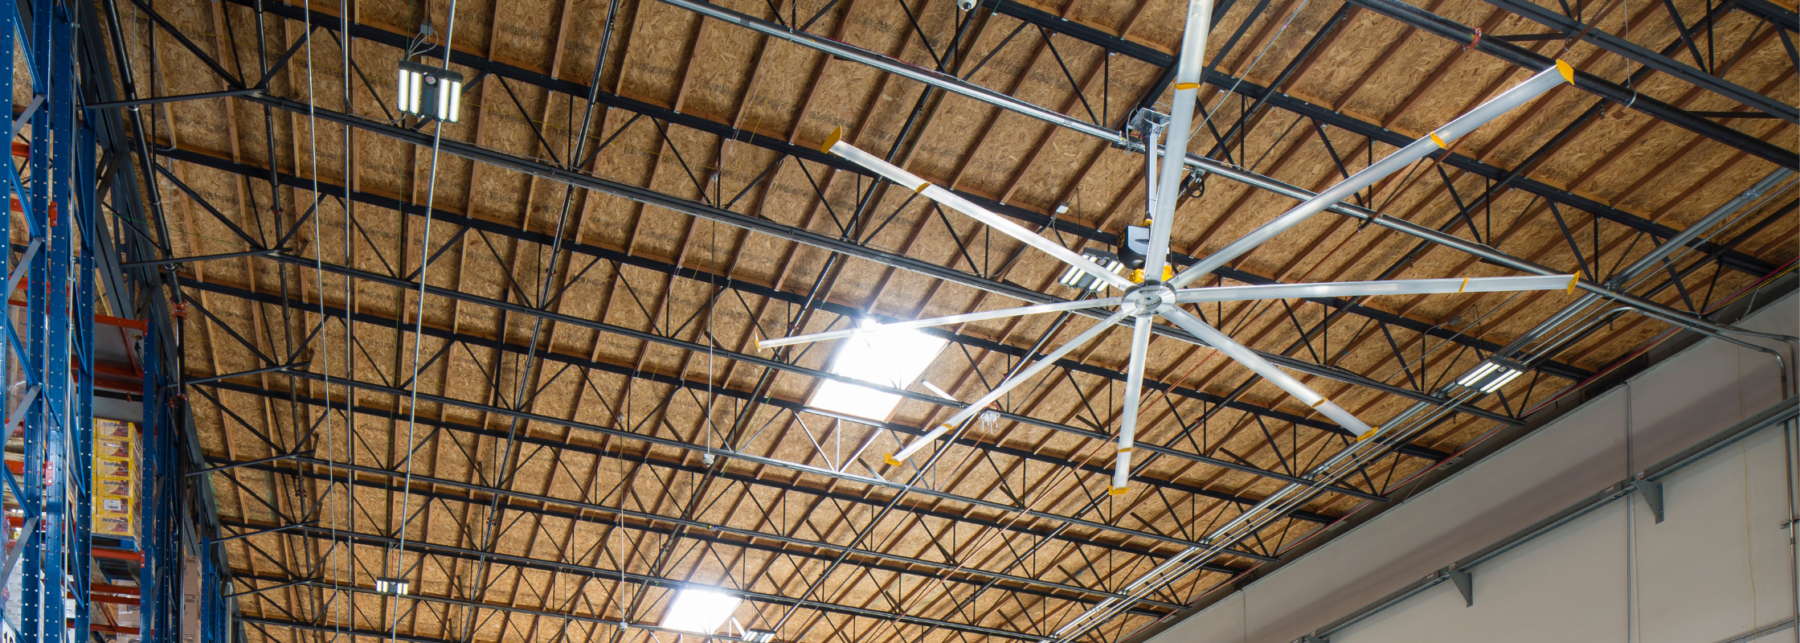 Big Ass Fan on warehouse ceiling